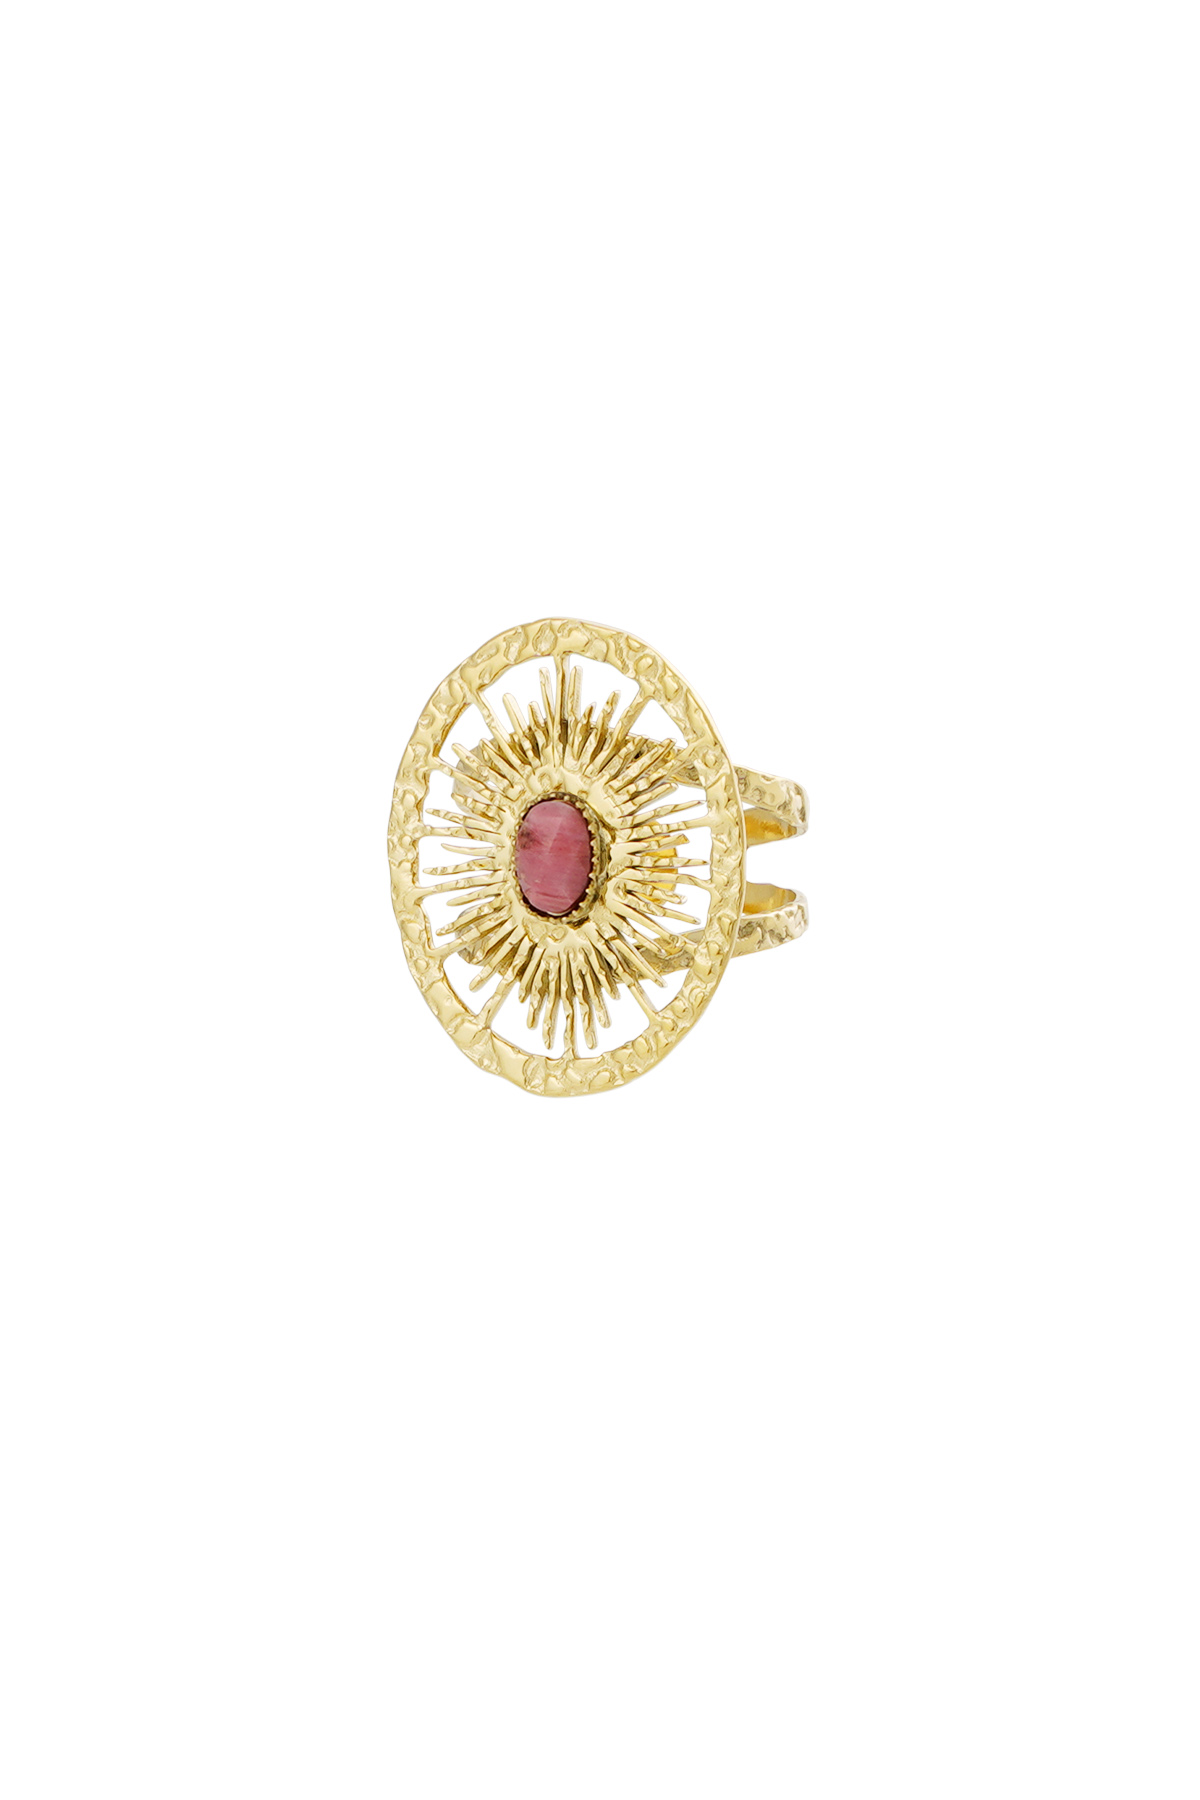 Ring ronde twister met steen - goud/roze h5 